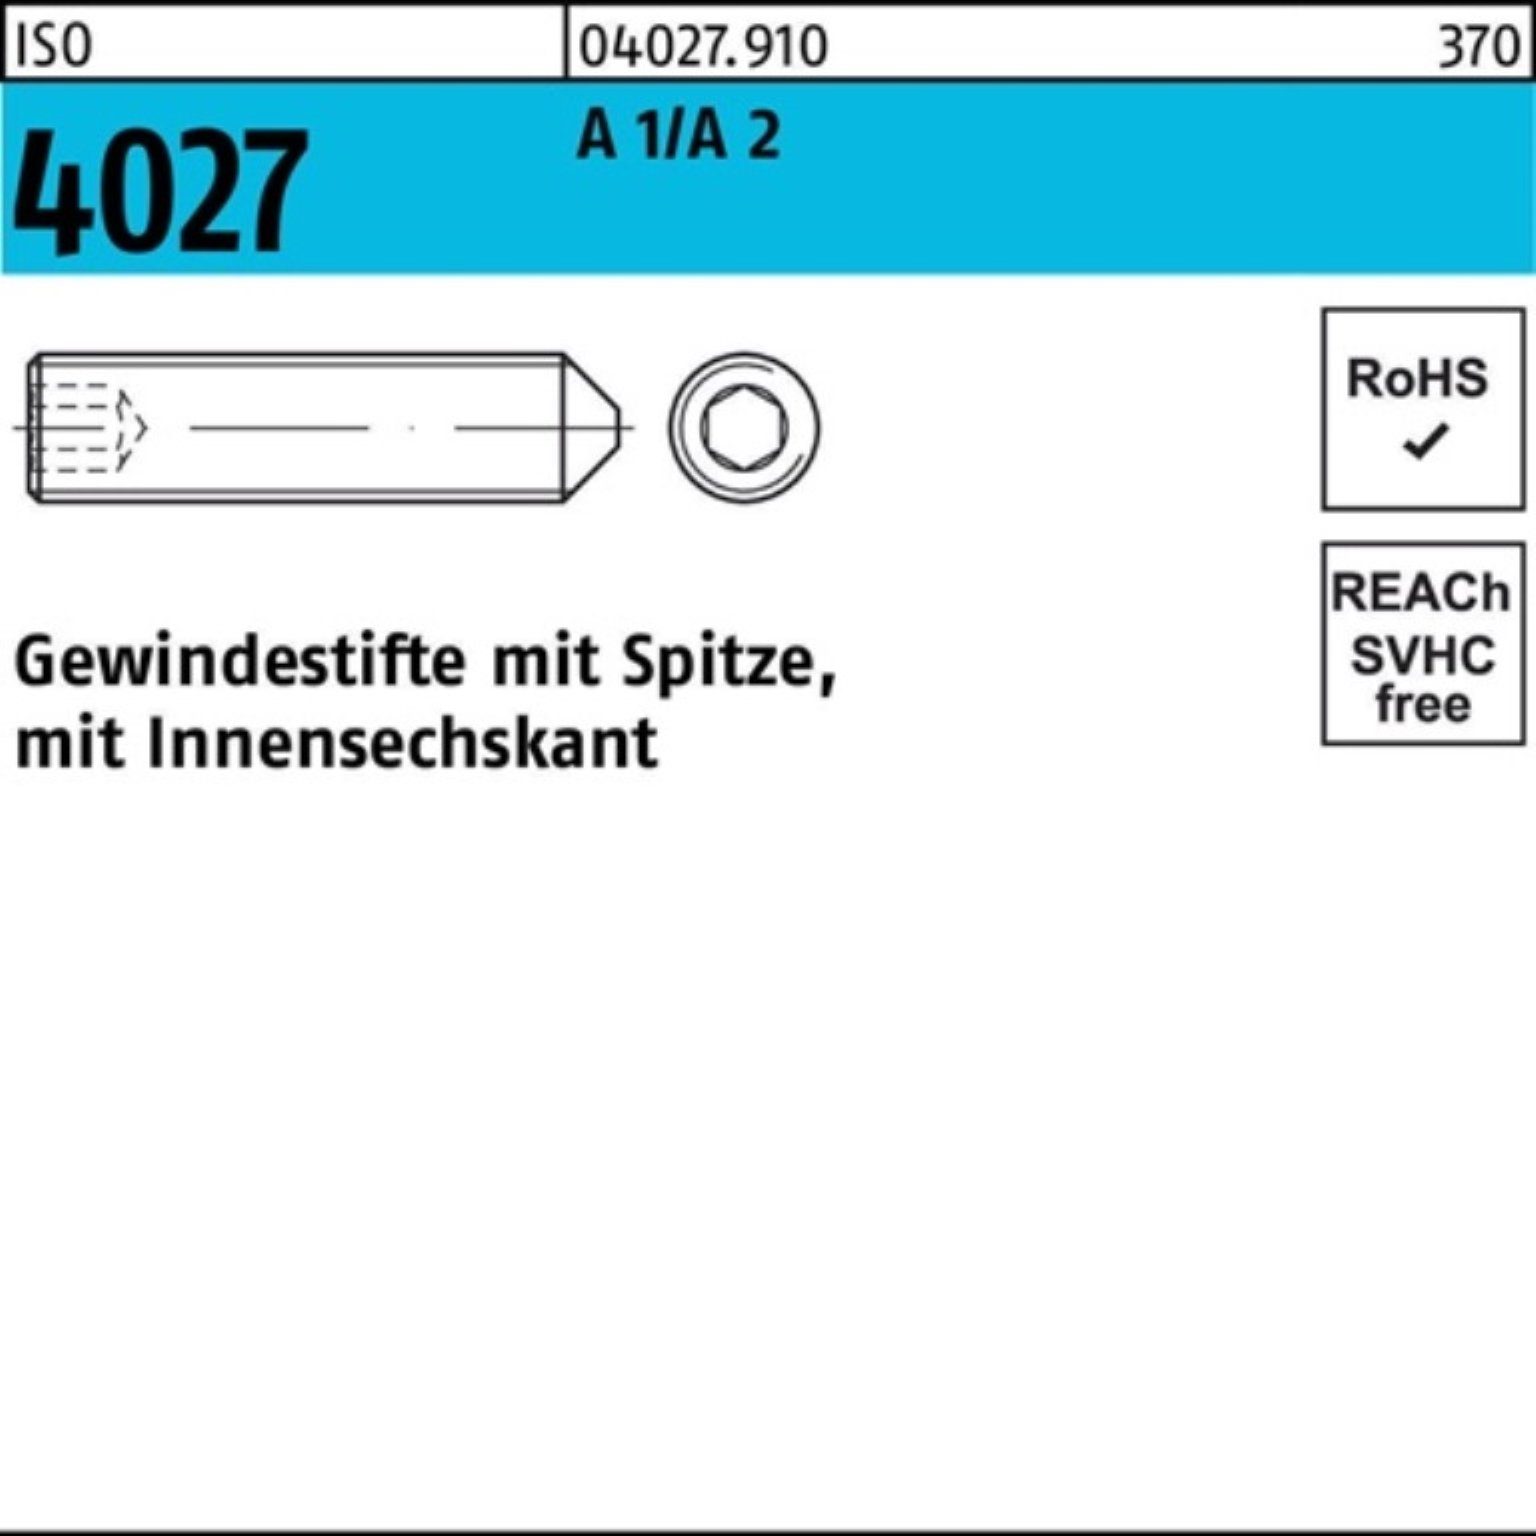 M2x Spitze/Innen-6kt Gewindestift 4027 500 500er Reyher ISO Gewindebolzen Stück 6 Pack 2 A